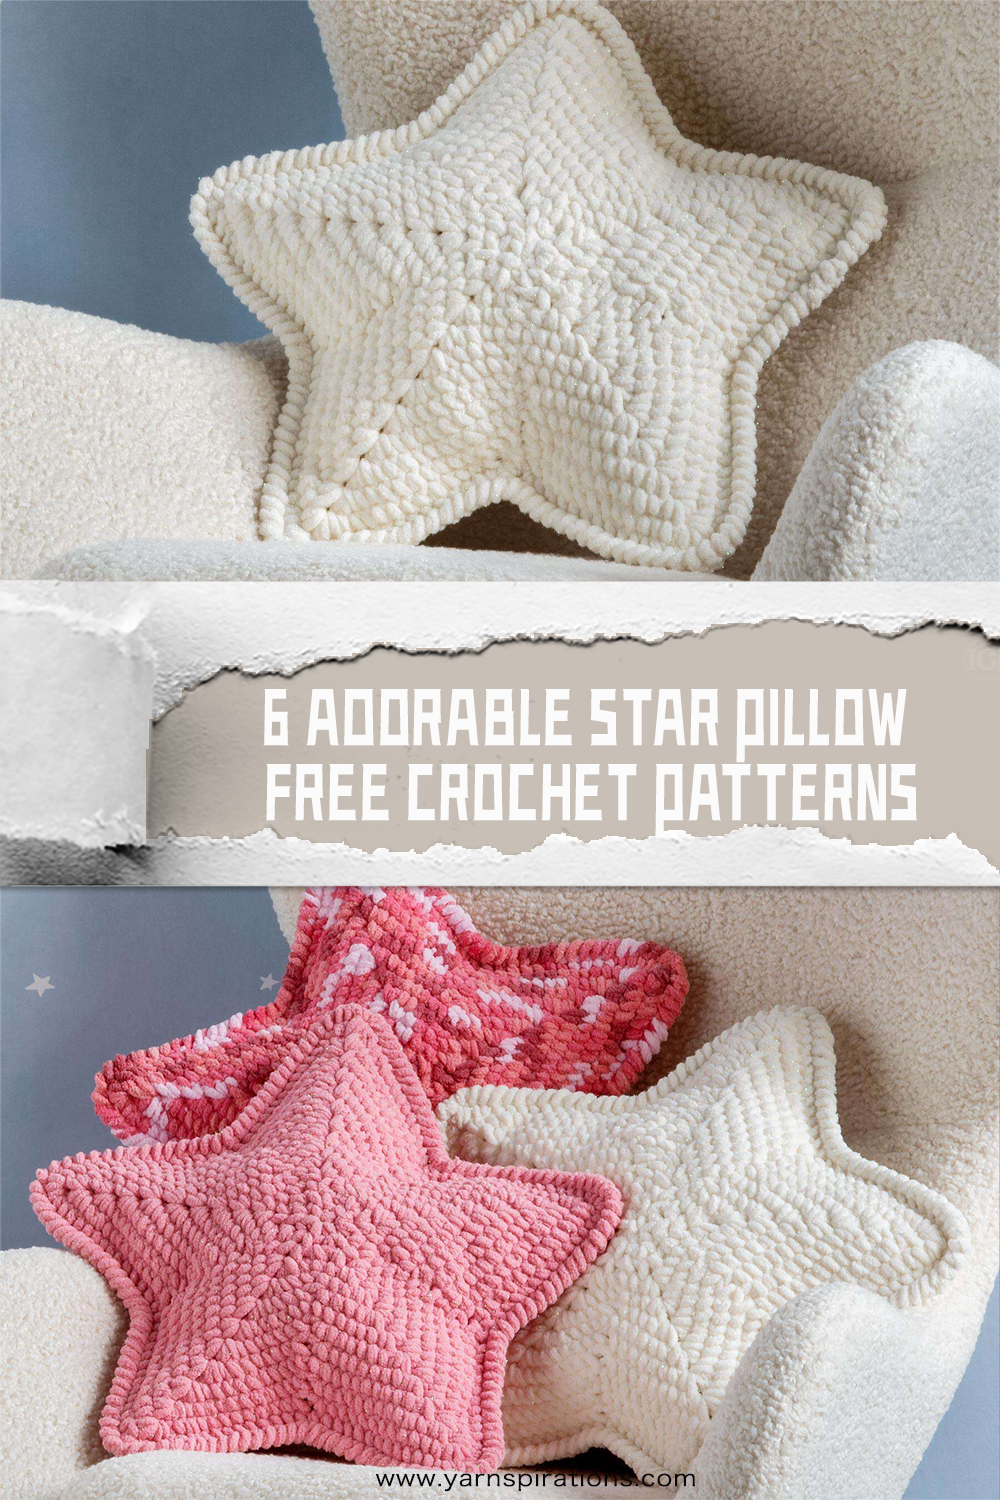 6 Adorable Star Pillow Free Crochet Patterns - iGOODideas.com